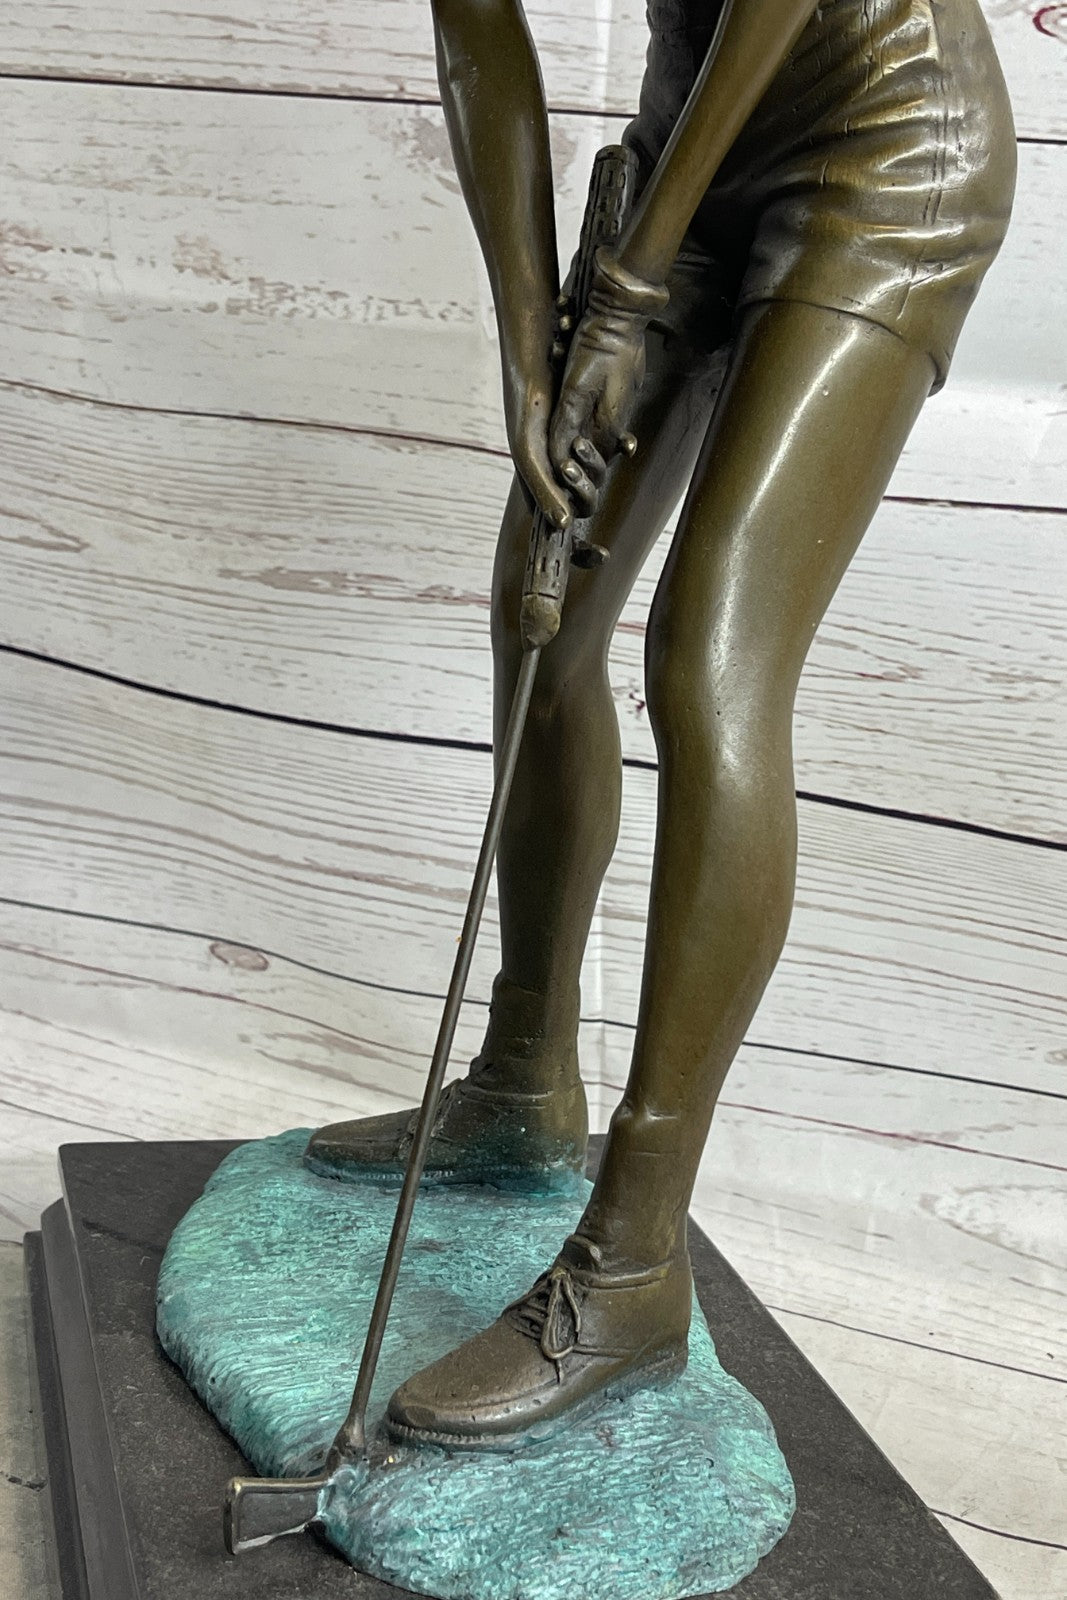 Impressive Female Golfer Bronze Statue by Milo - Extra Large Artwork